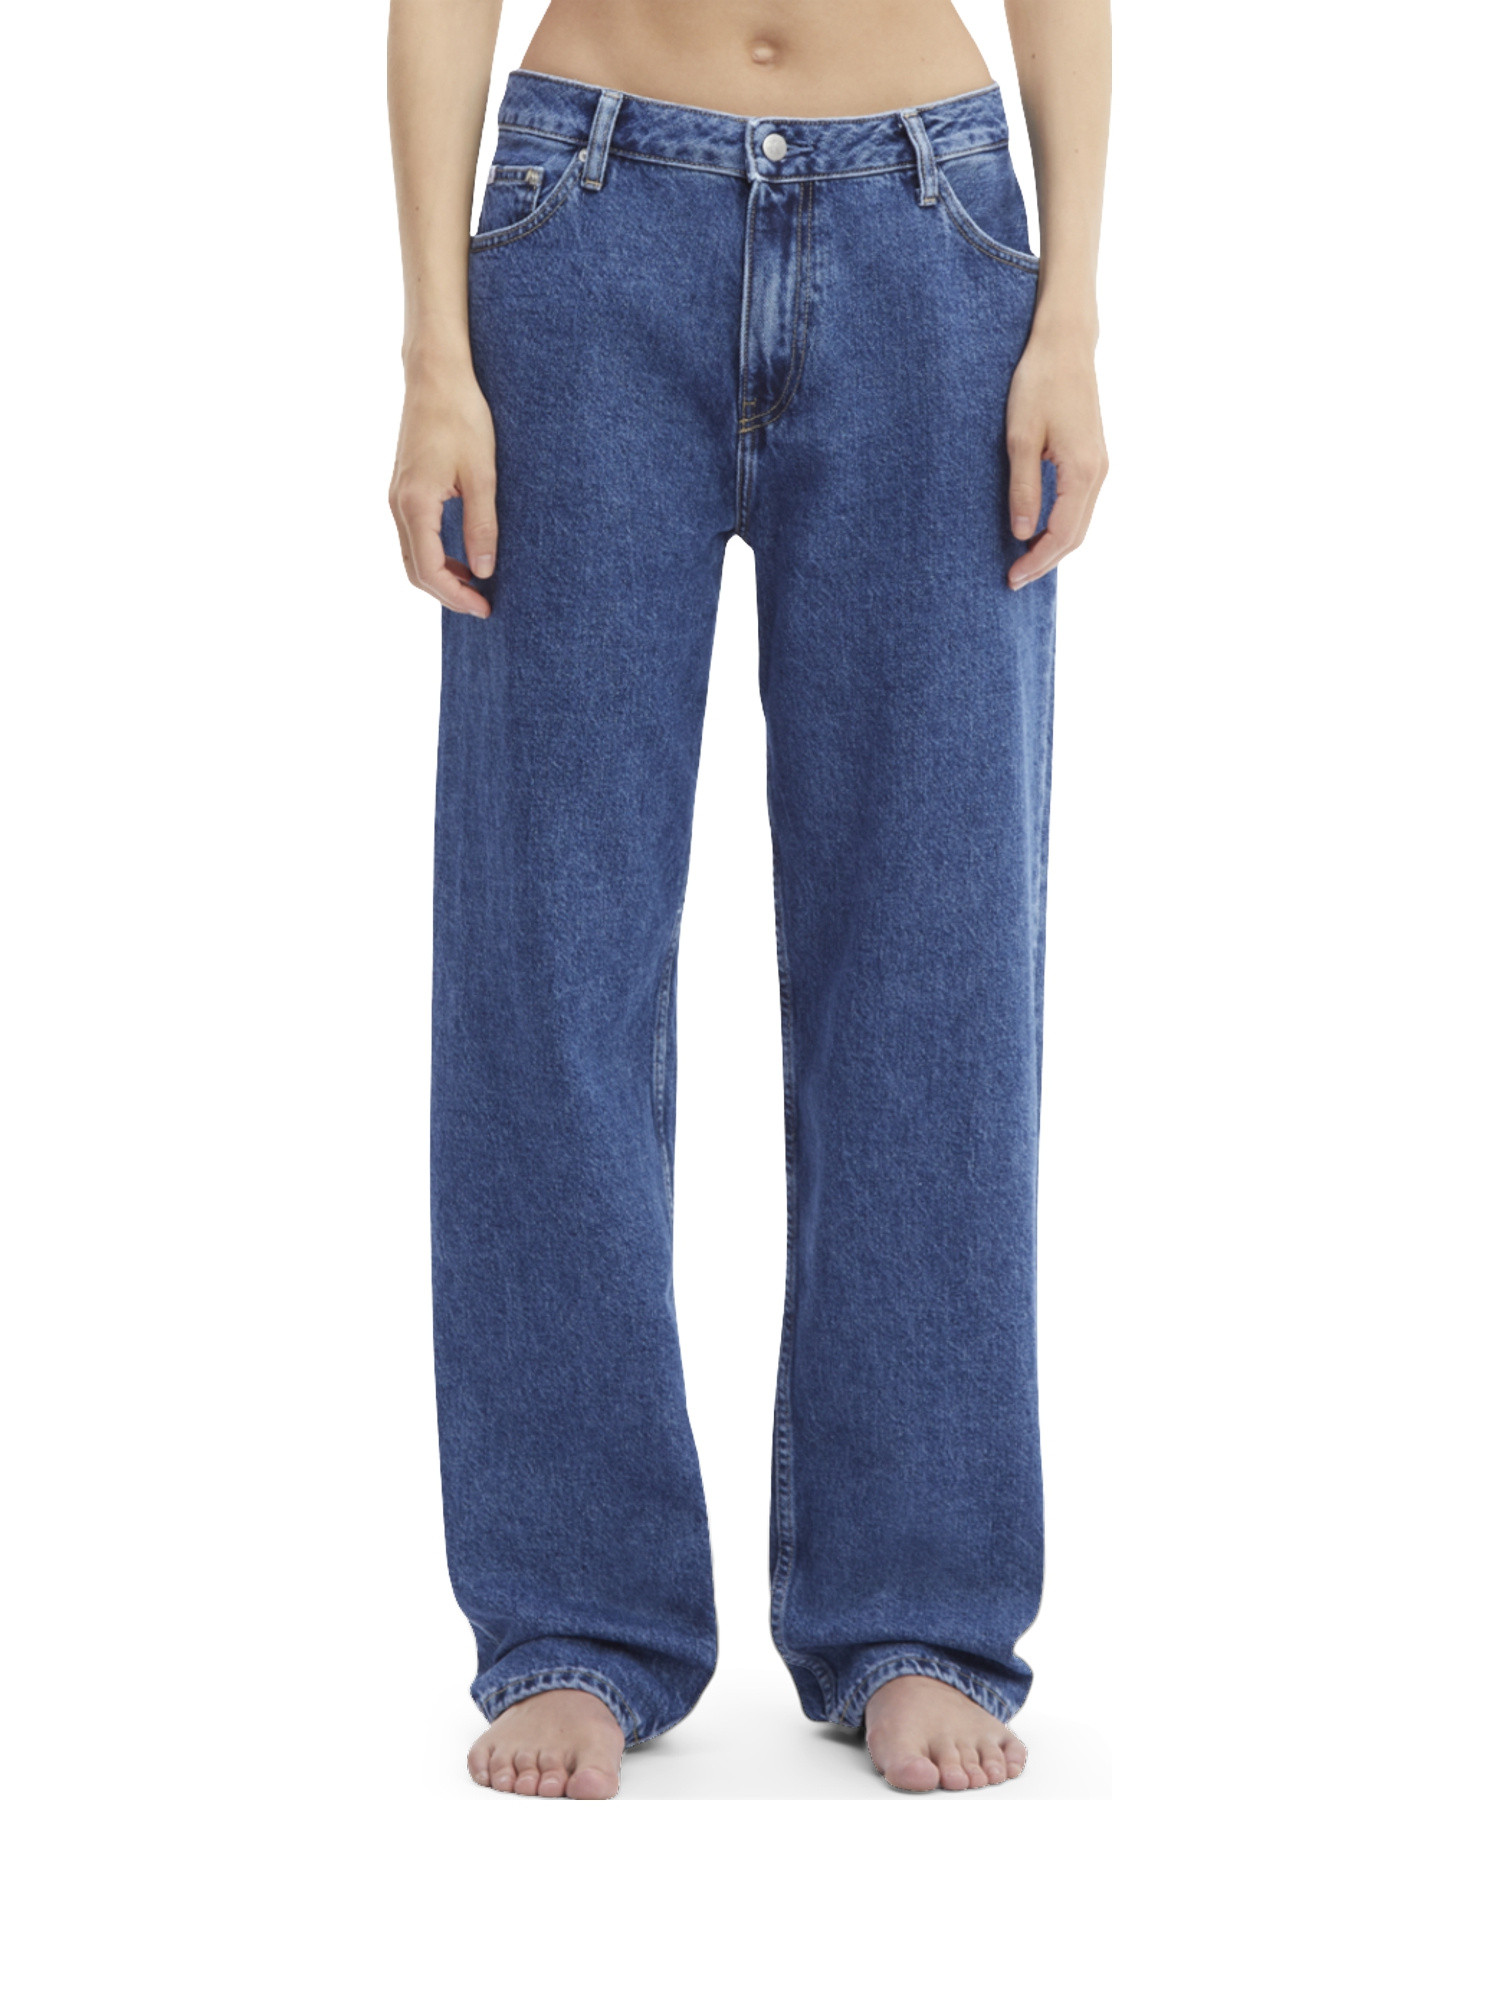 Jeans anni 90', Denim, large